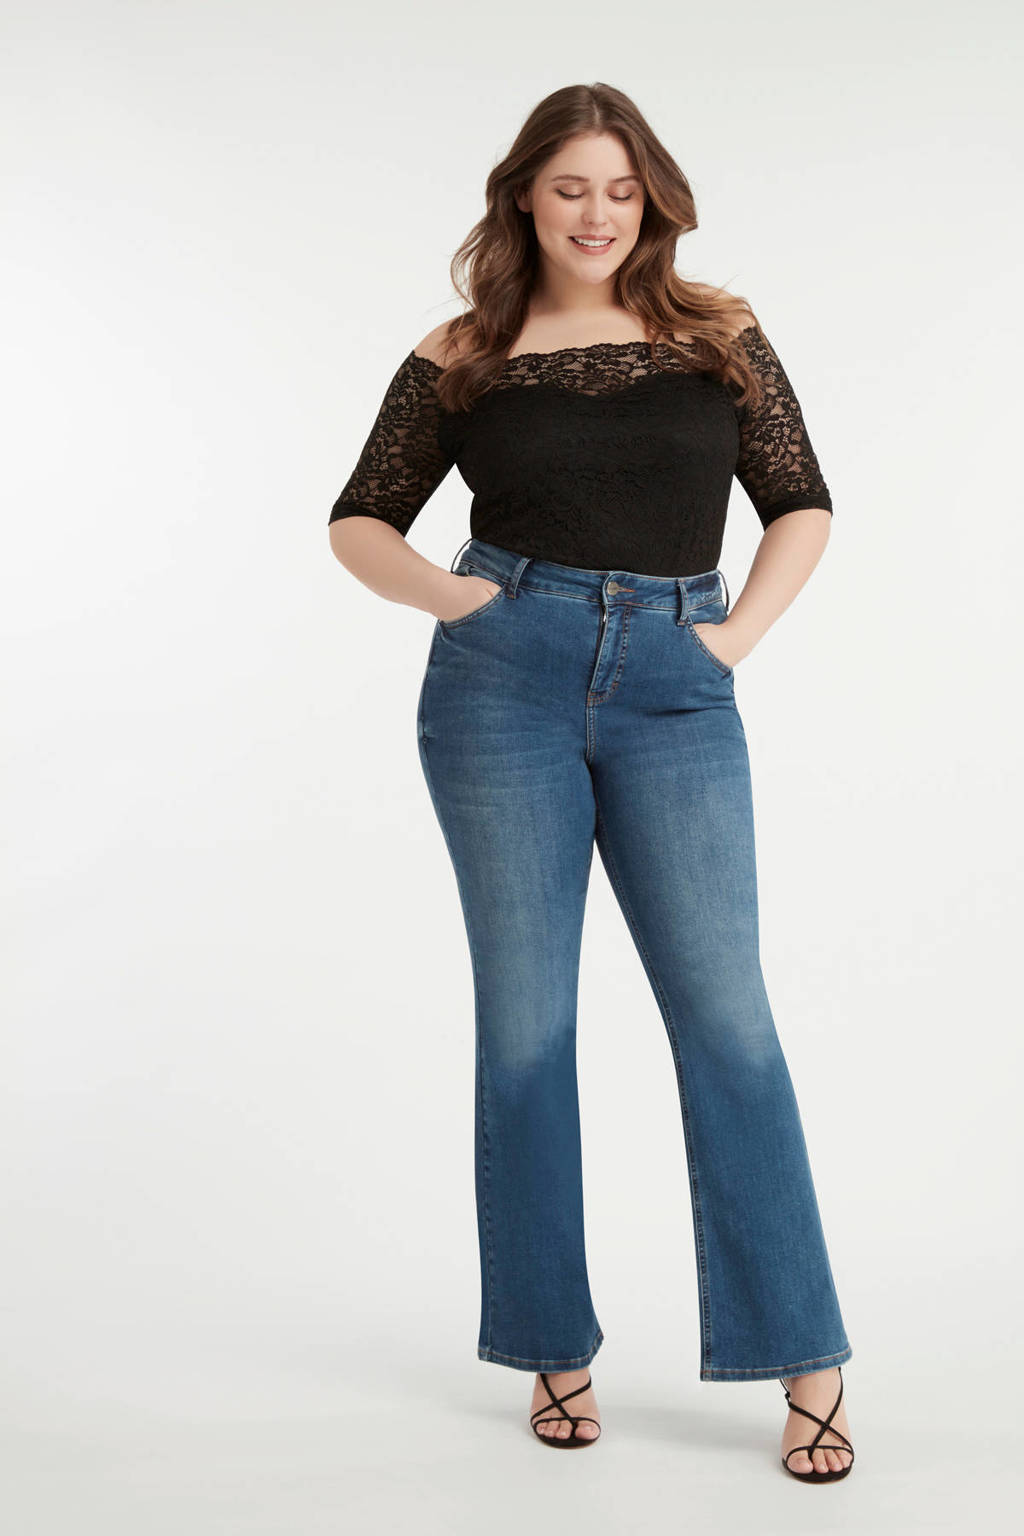 Vakman toeter Gewoon overlopen MS Mode high waist flared jeans | wehkamp